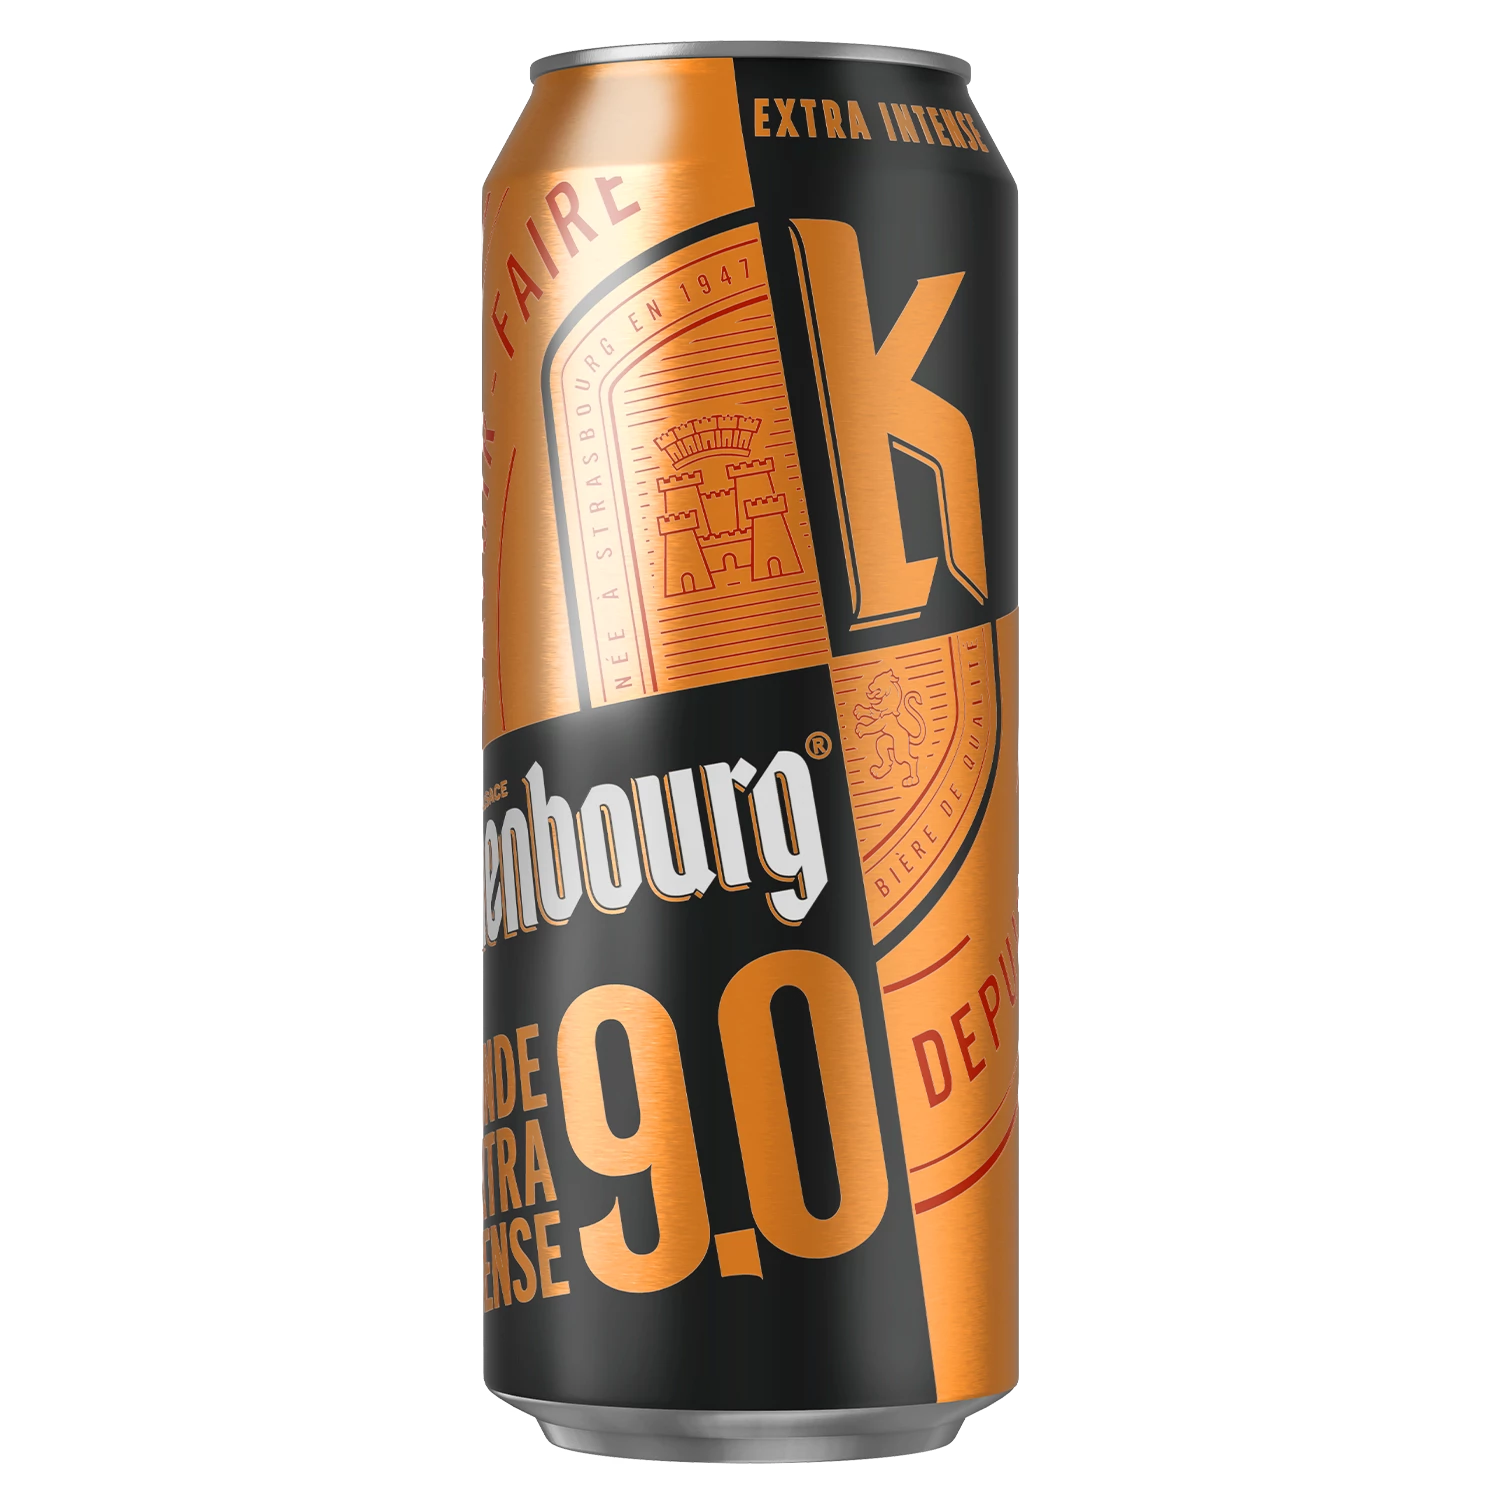 Bière Blonde Extra Intense, 9°, 50cl - KRONENBOURG